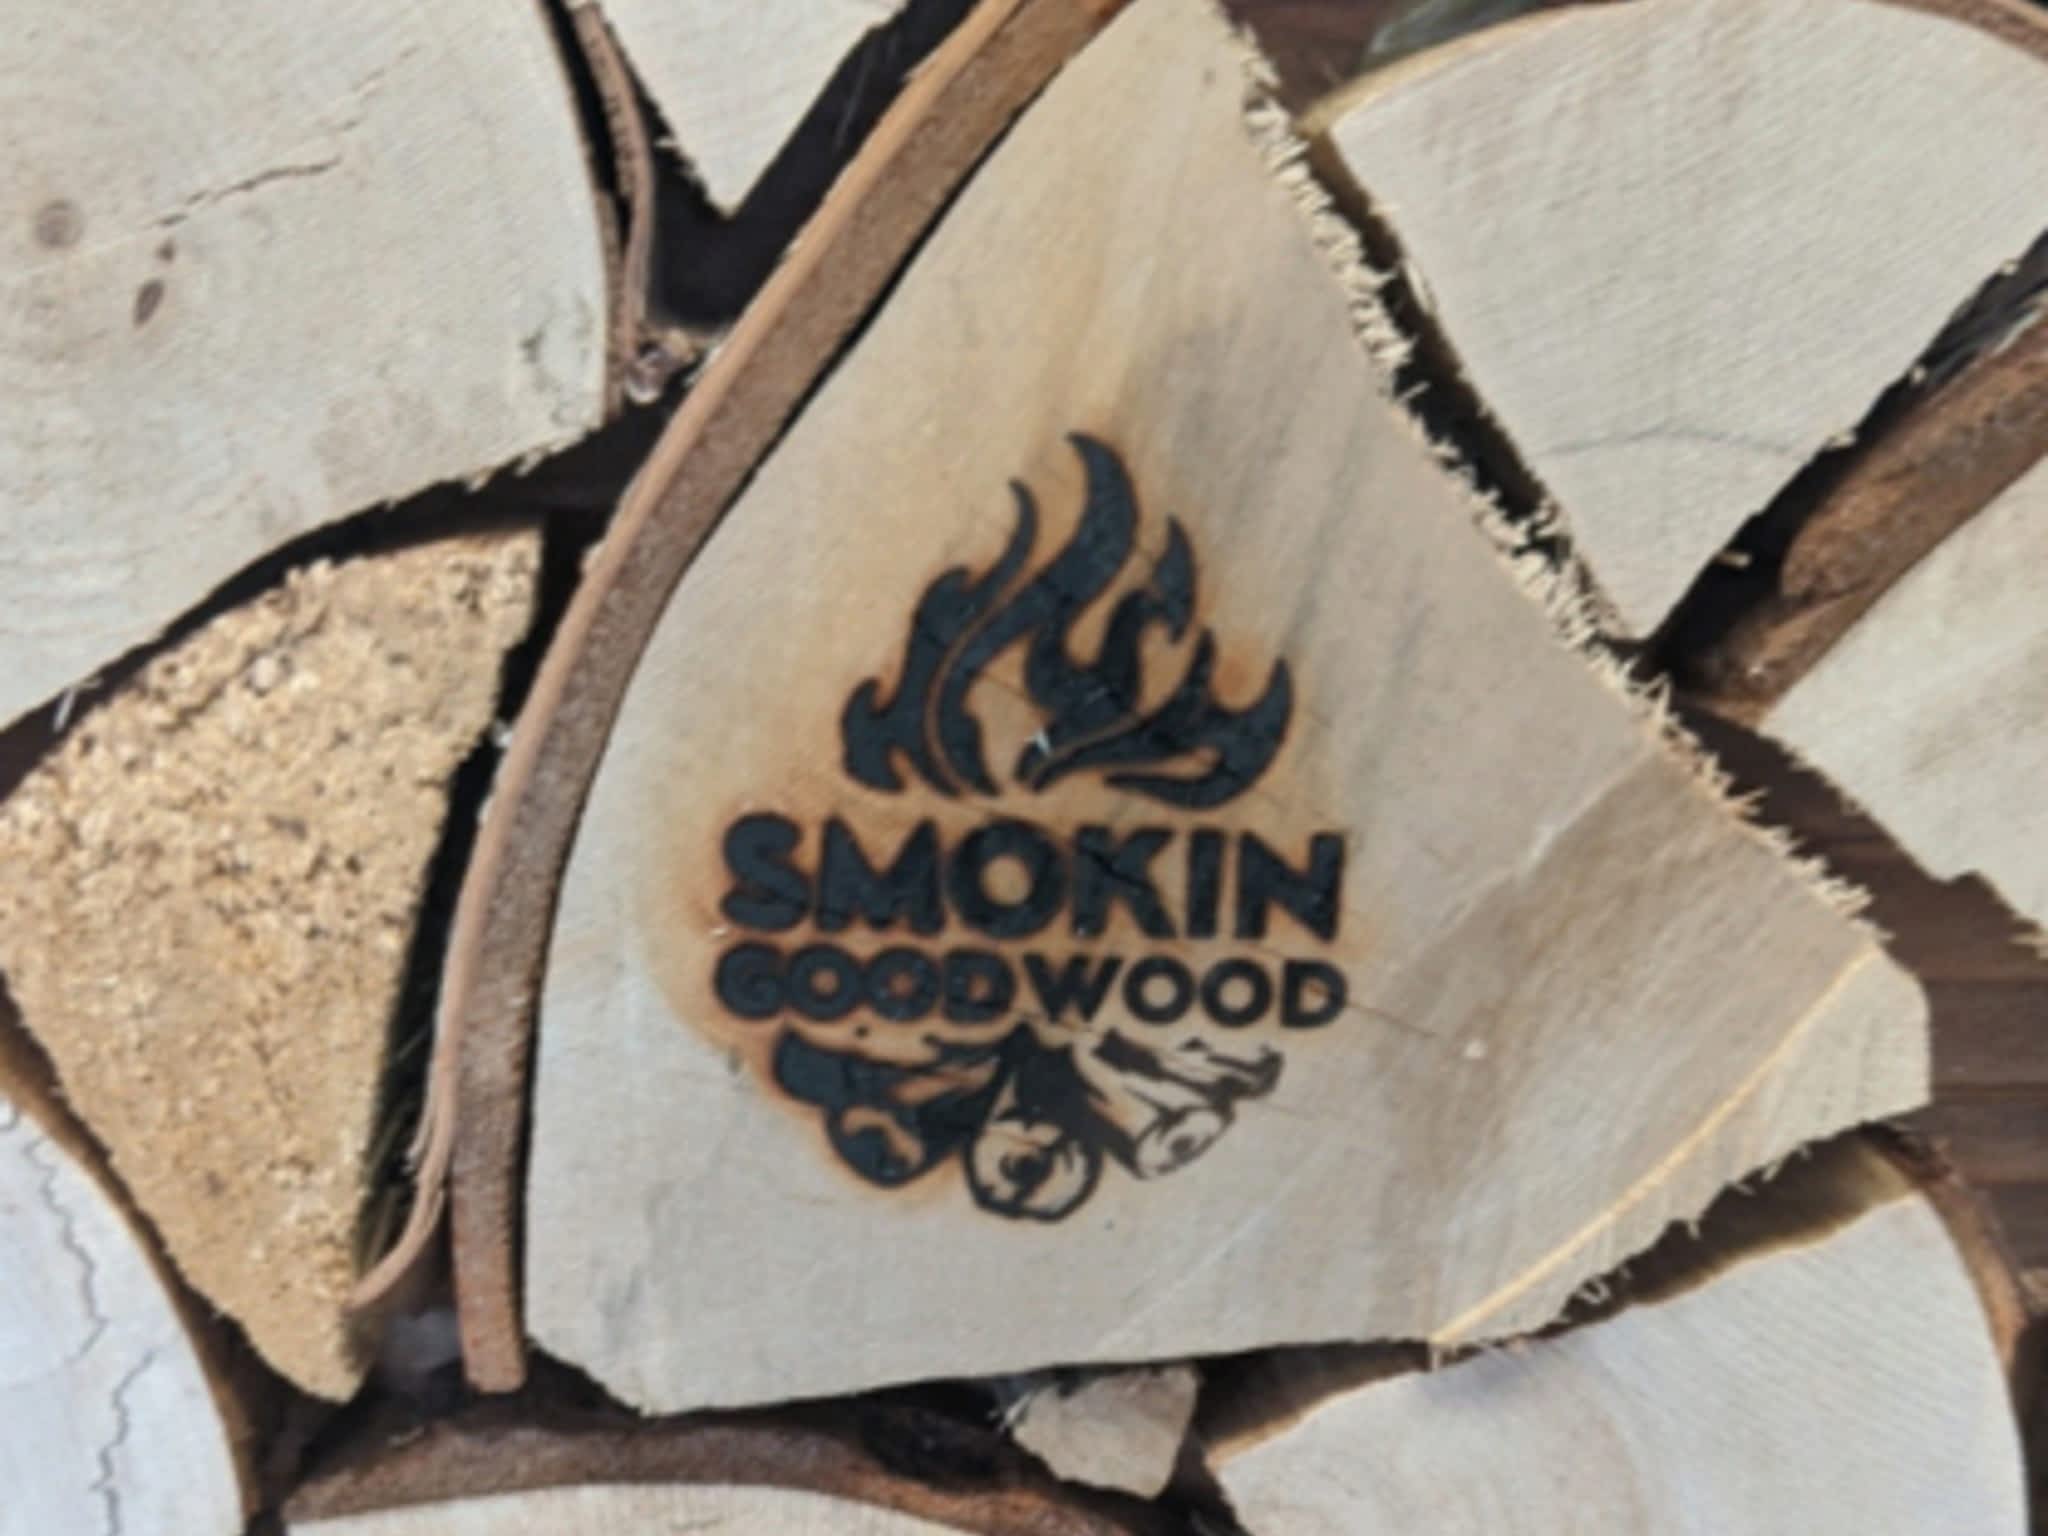 photo Smokin Good Wood